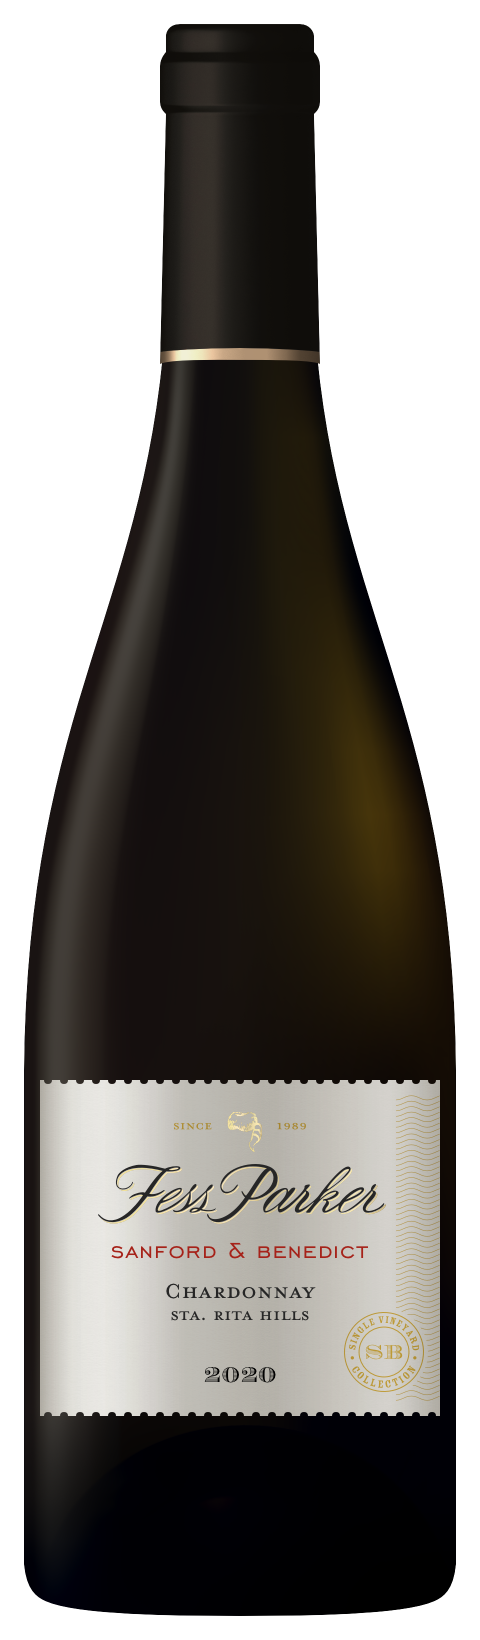 Bottle shot of Sanford & Benedict Chardonnay